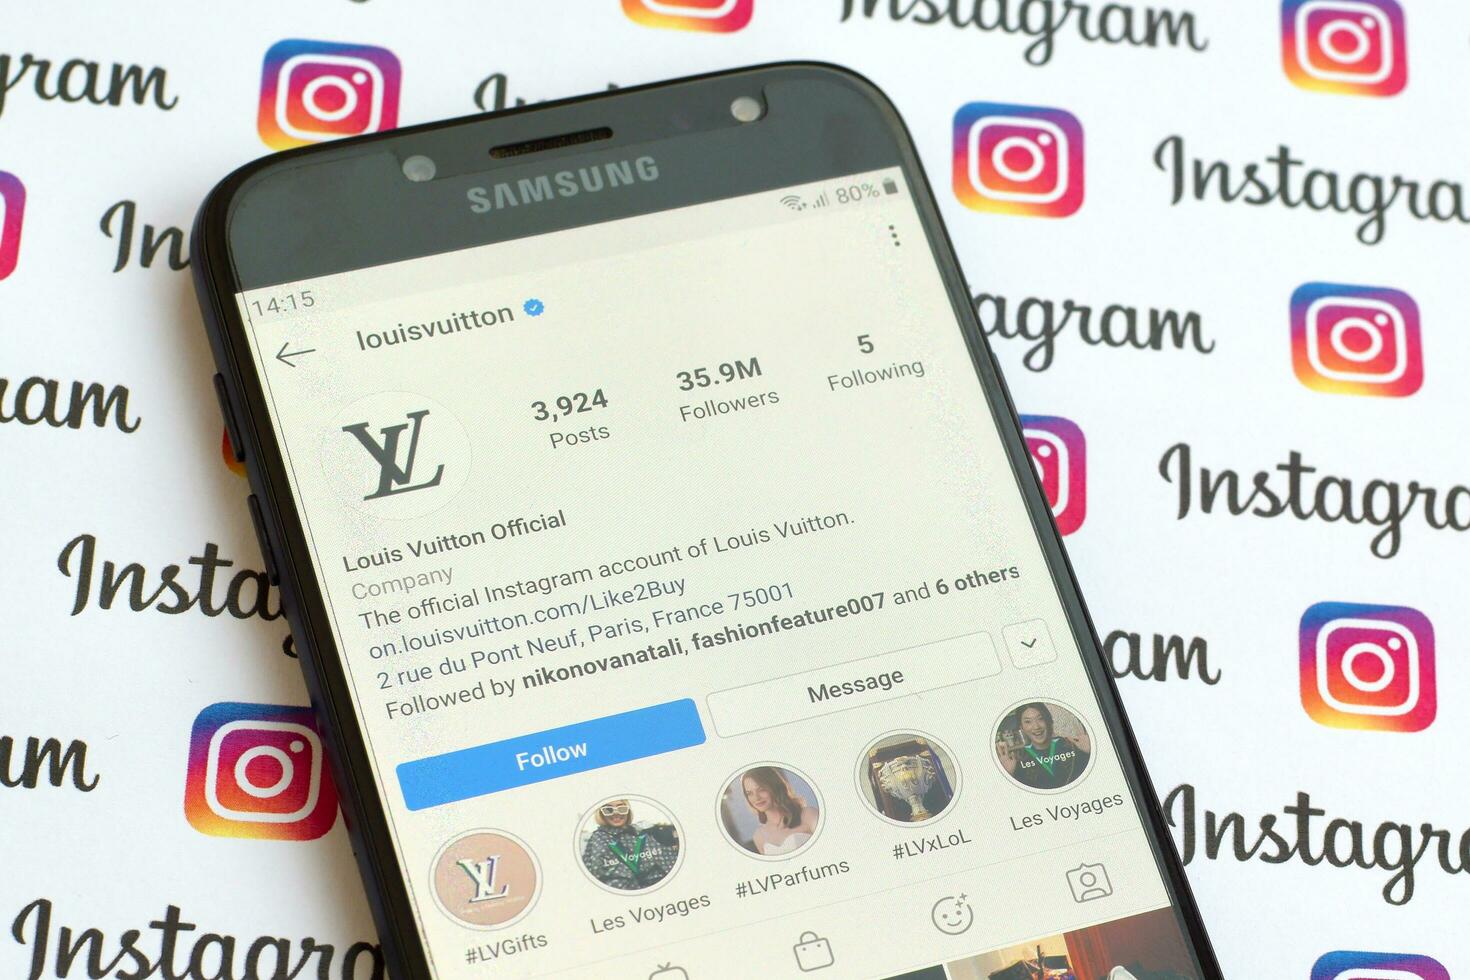 Louis vuitton ufficiale instagram account su smartphone schermo su carta instagram striscione. foto